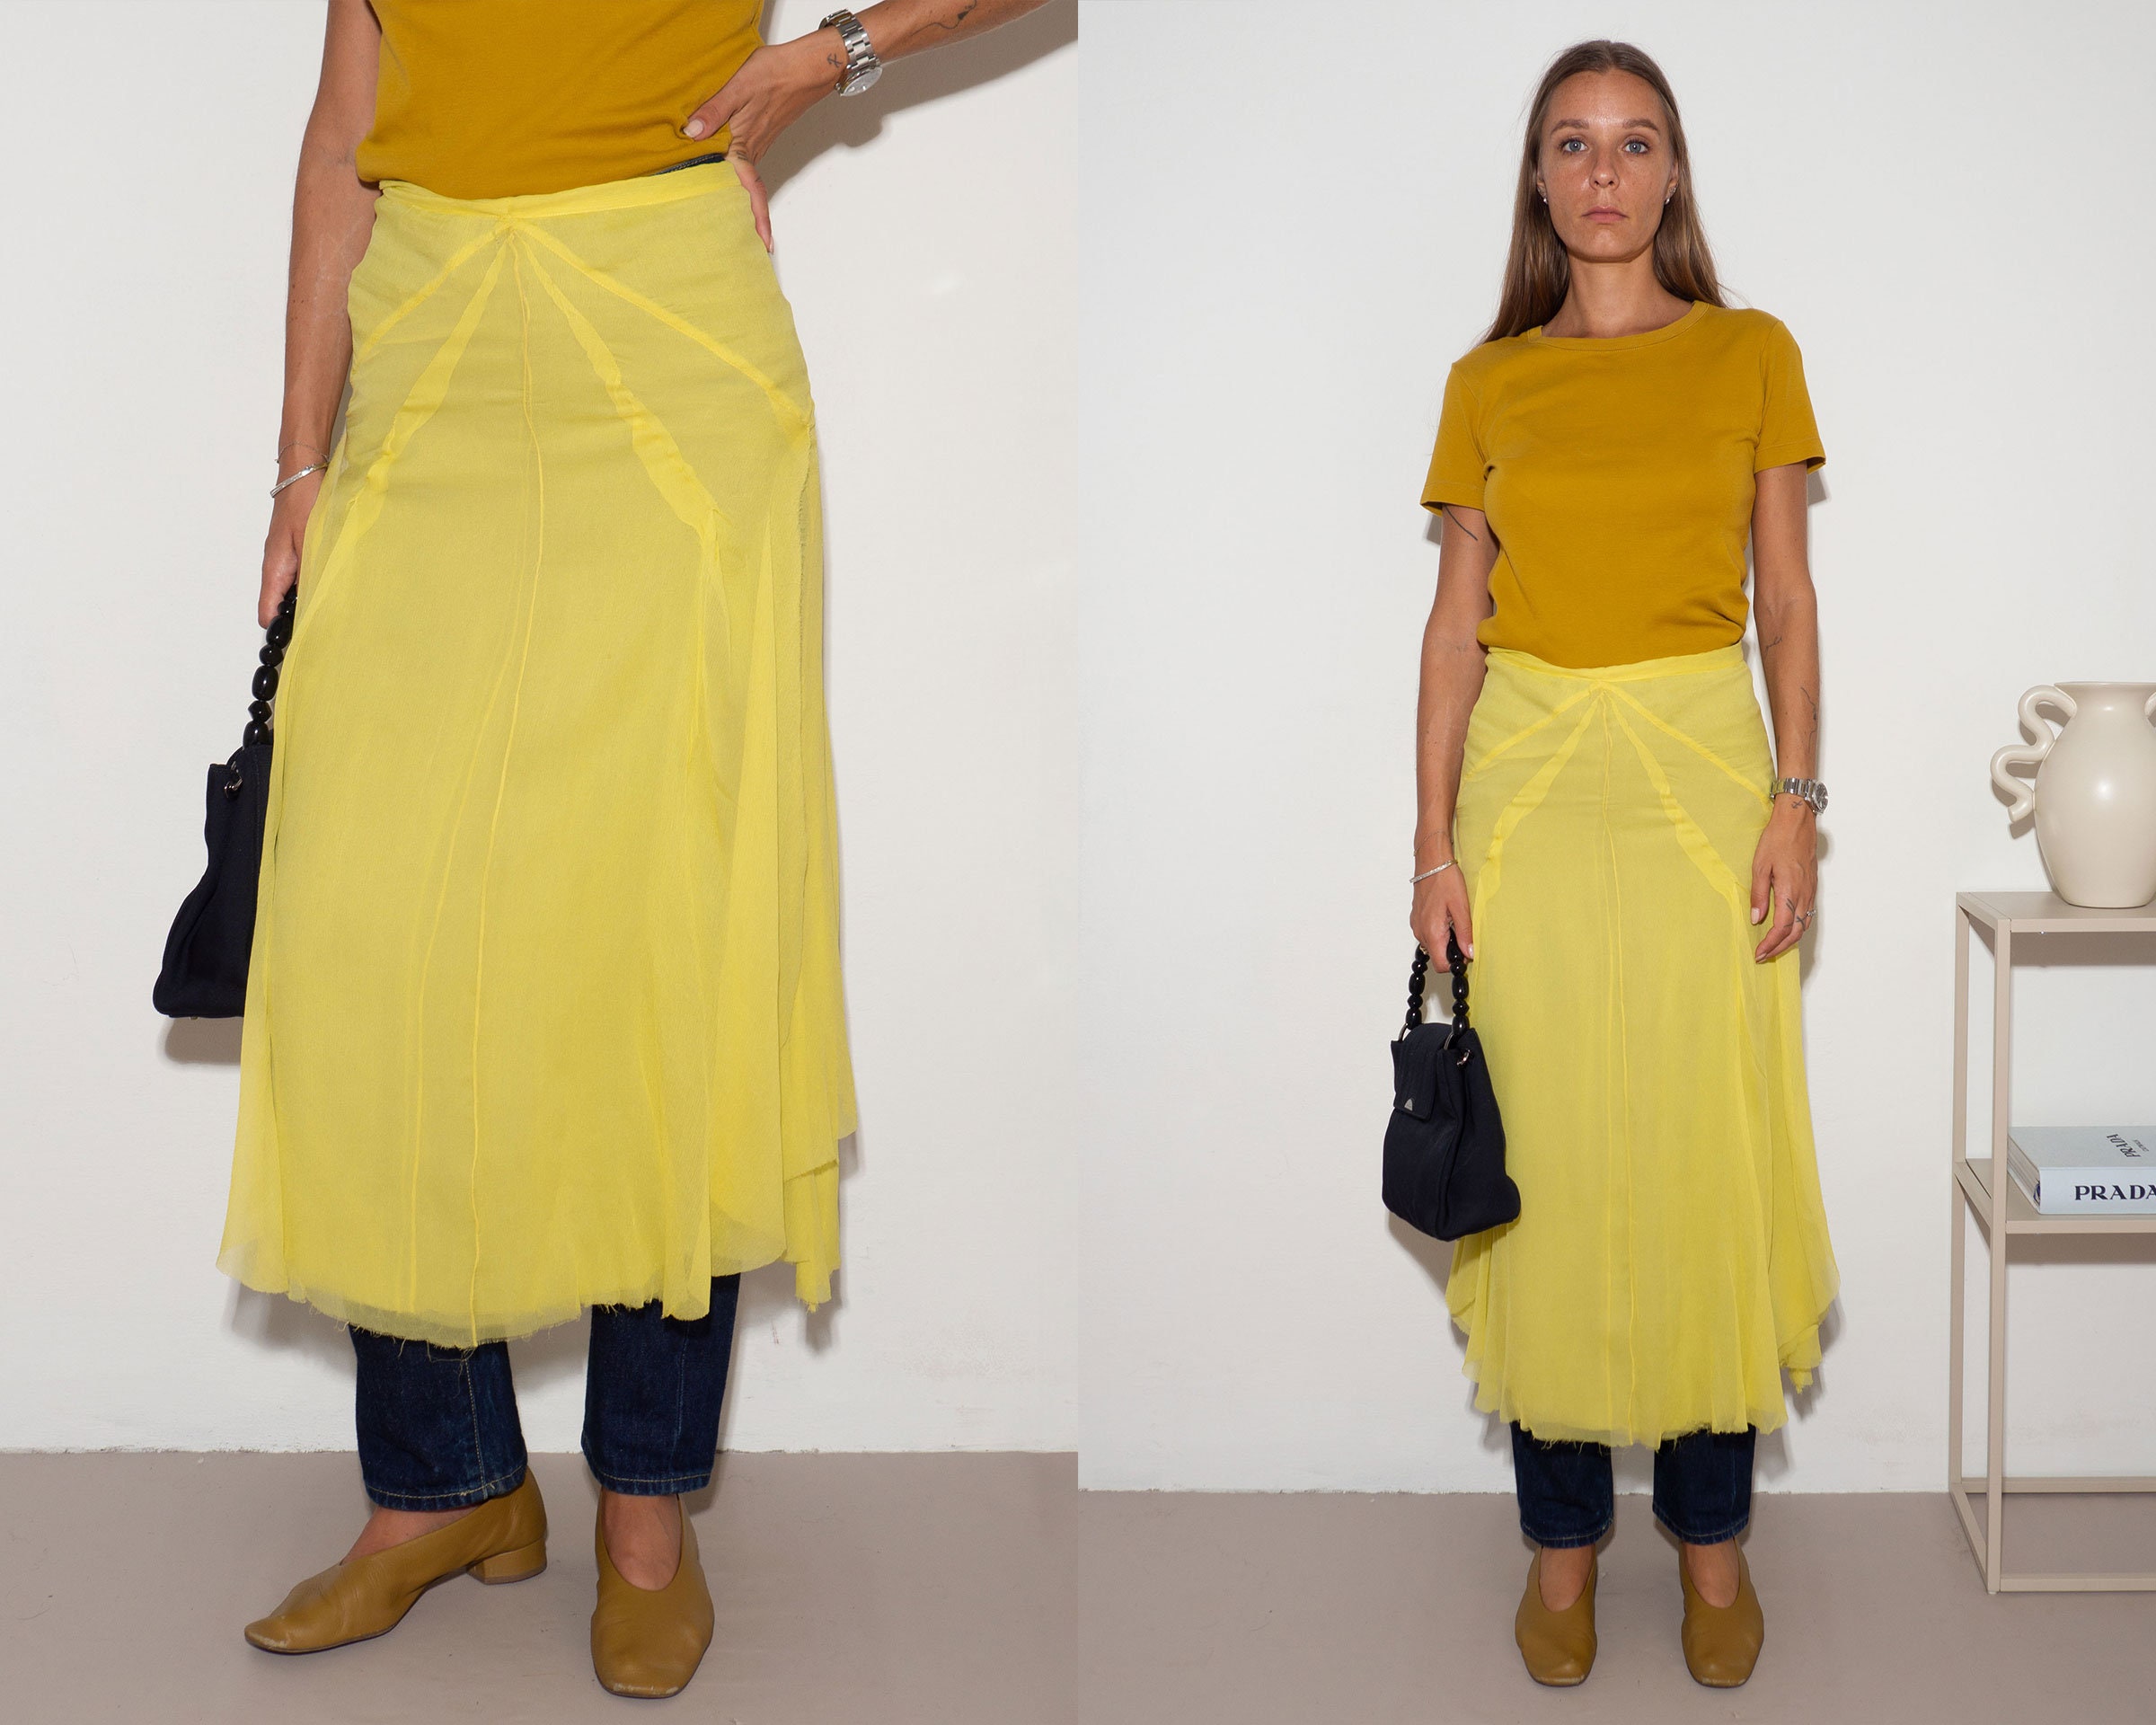 Intricate Baroque Jacquard Maxi Skirt - Retro, Indie and Unique Fashion